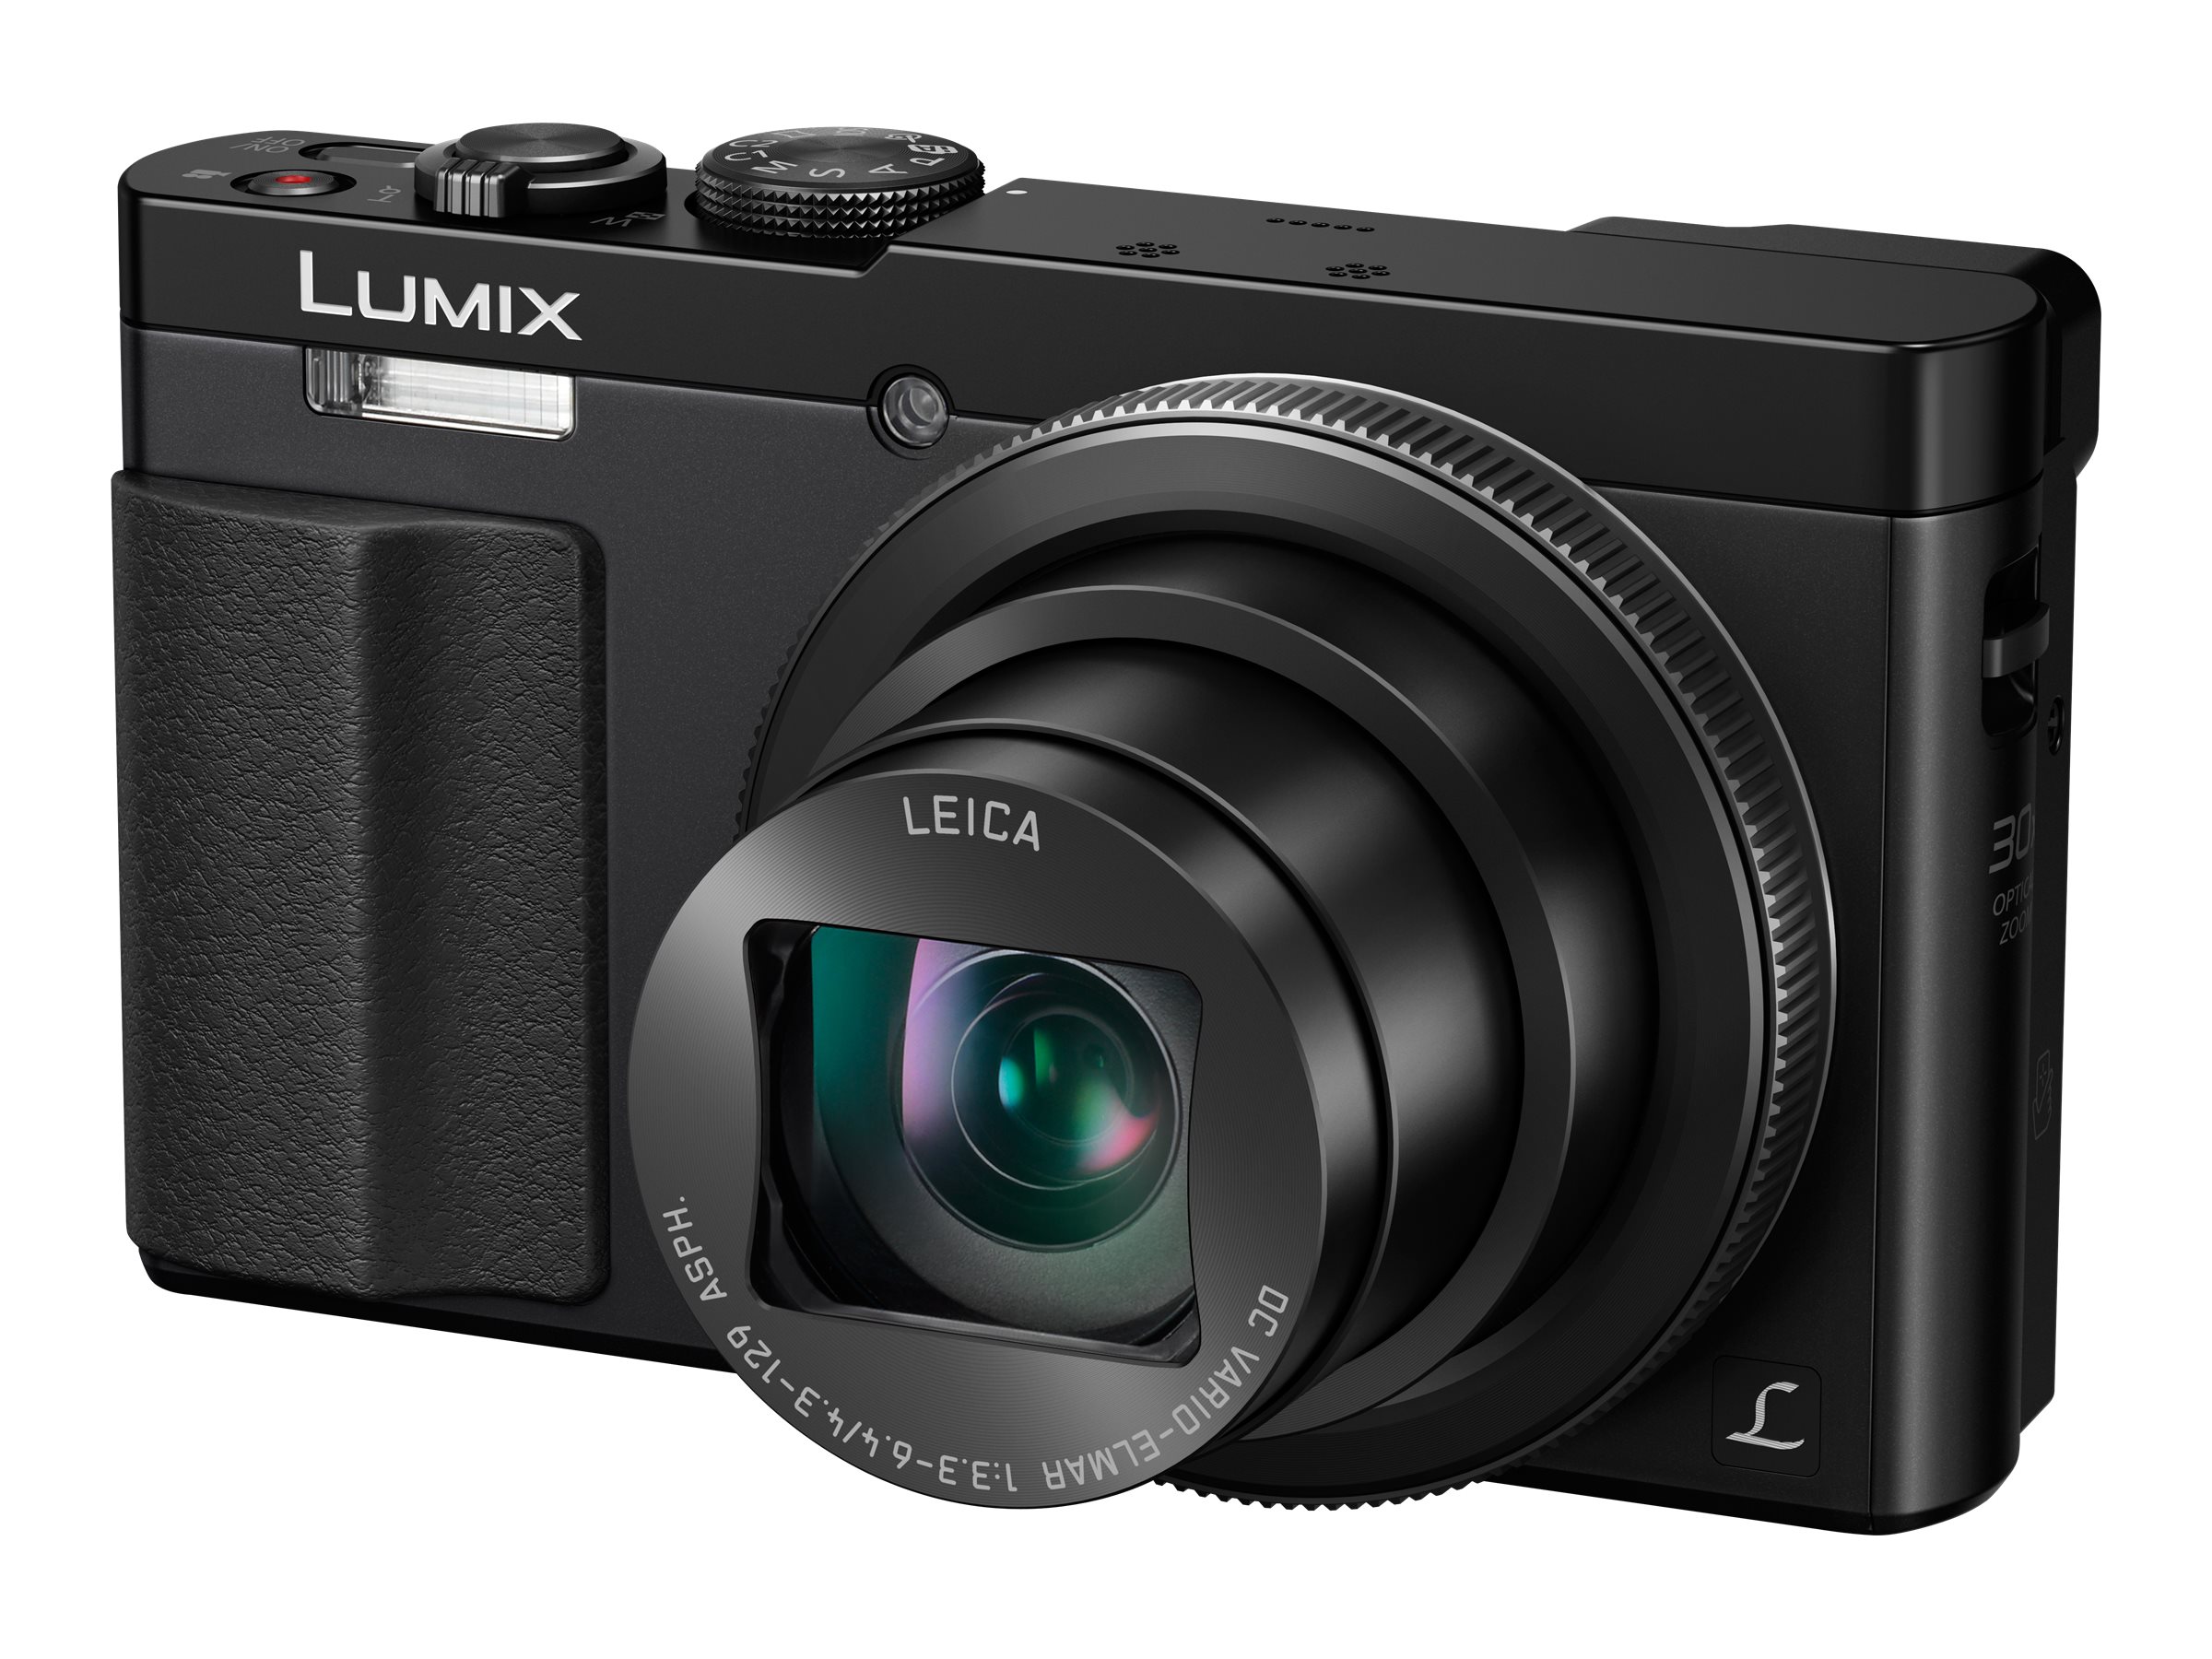 Panasonic Lumix DMC-ZS50 - Digital camera - compact - 12.1 MP - 1080p - 30x optical zoom - Leica - Wi-Fi, NFC - black - image 2 of 10